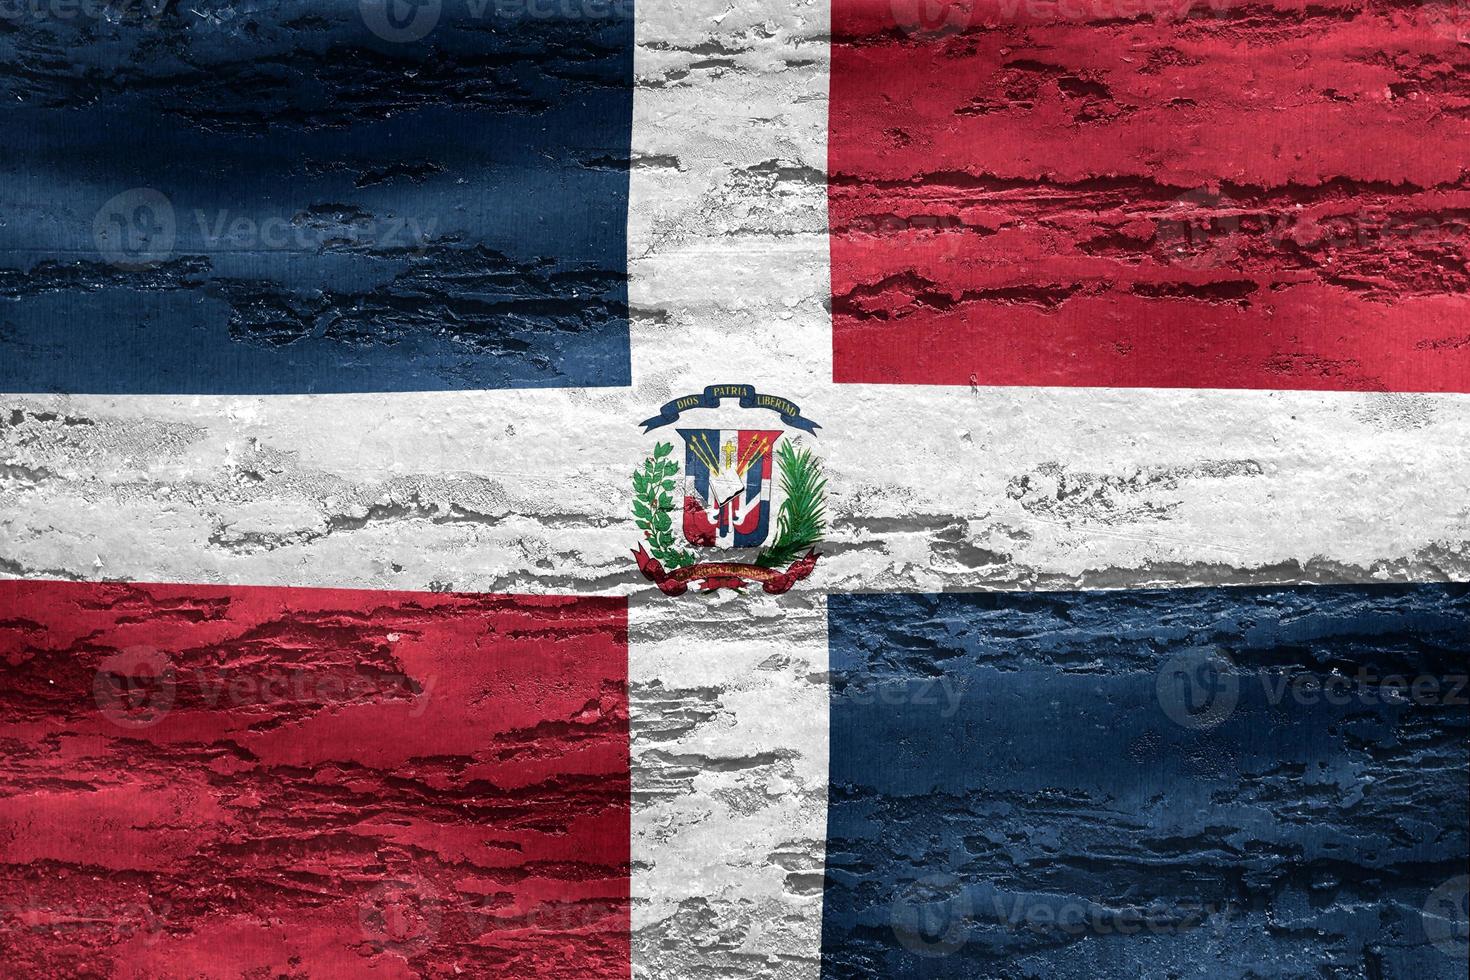 Dominikanska republikens flagga - realistiskt viftande tygflagga foto